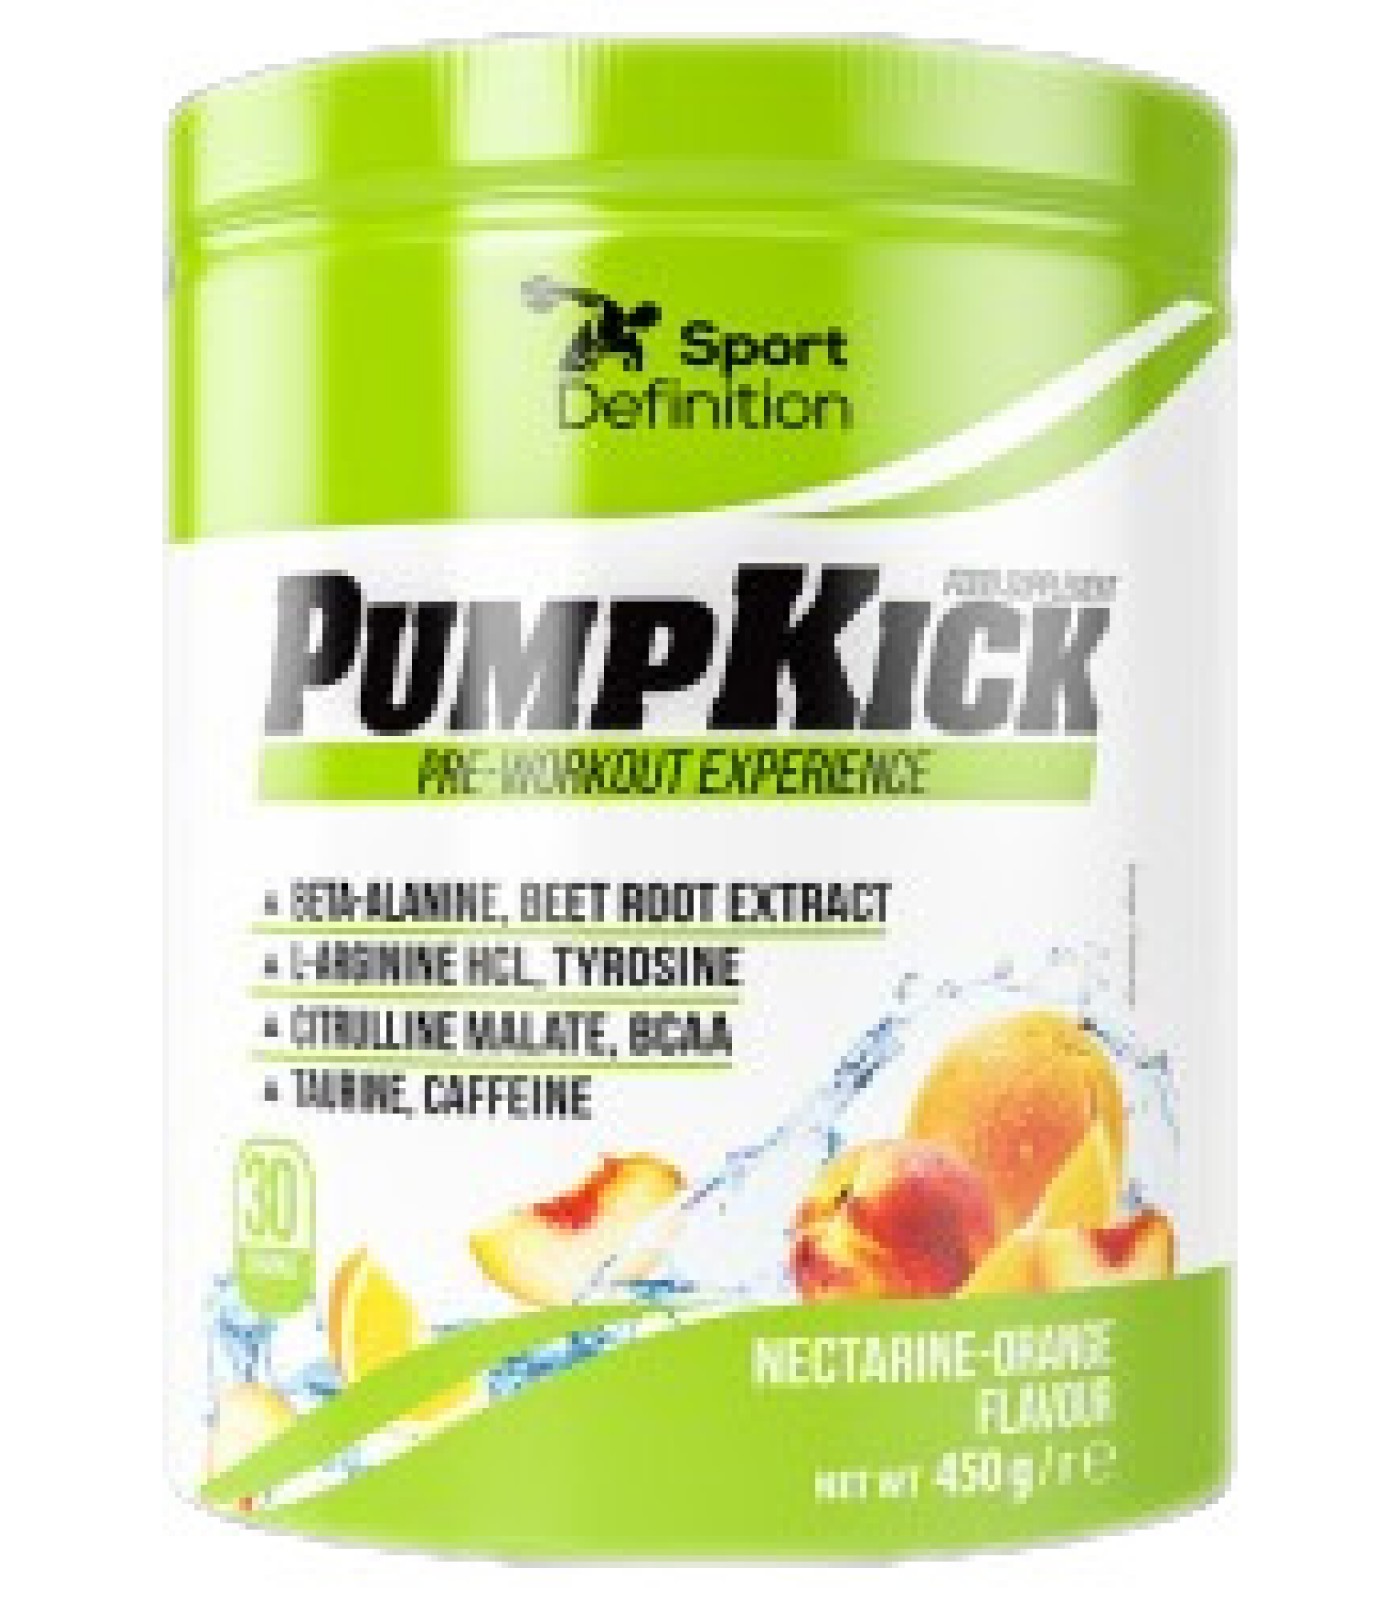 Sport Definition - Pump Kick / 450 грама, 30 дози